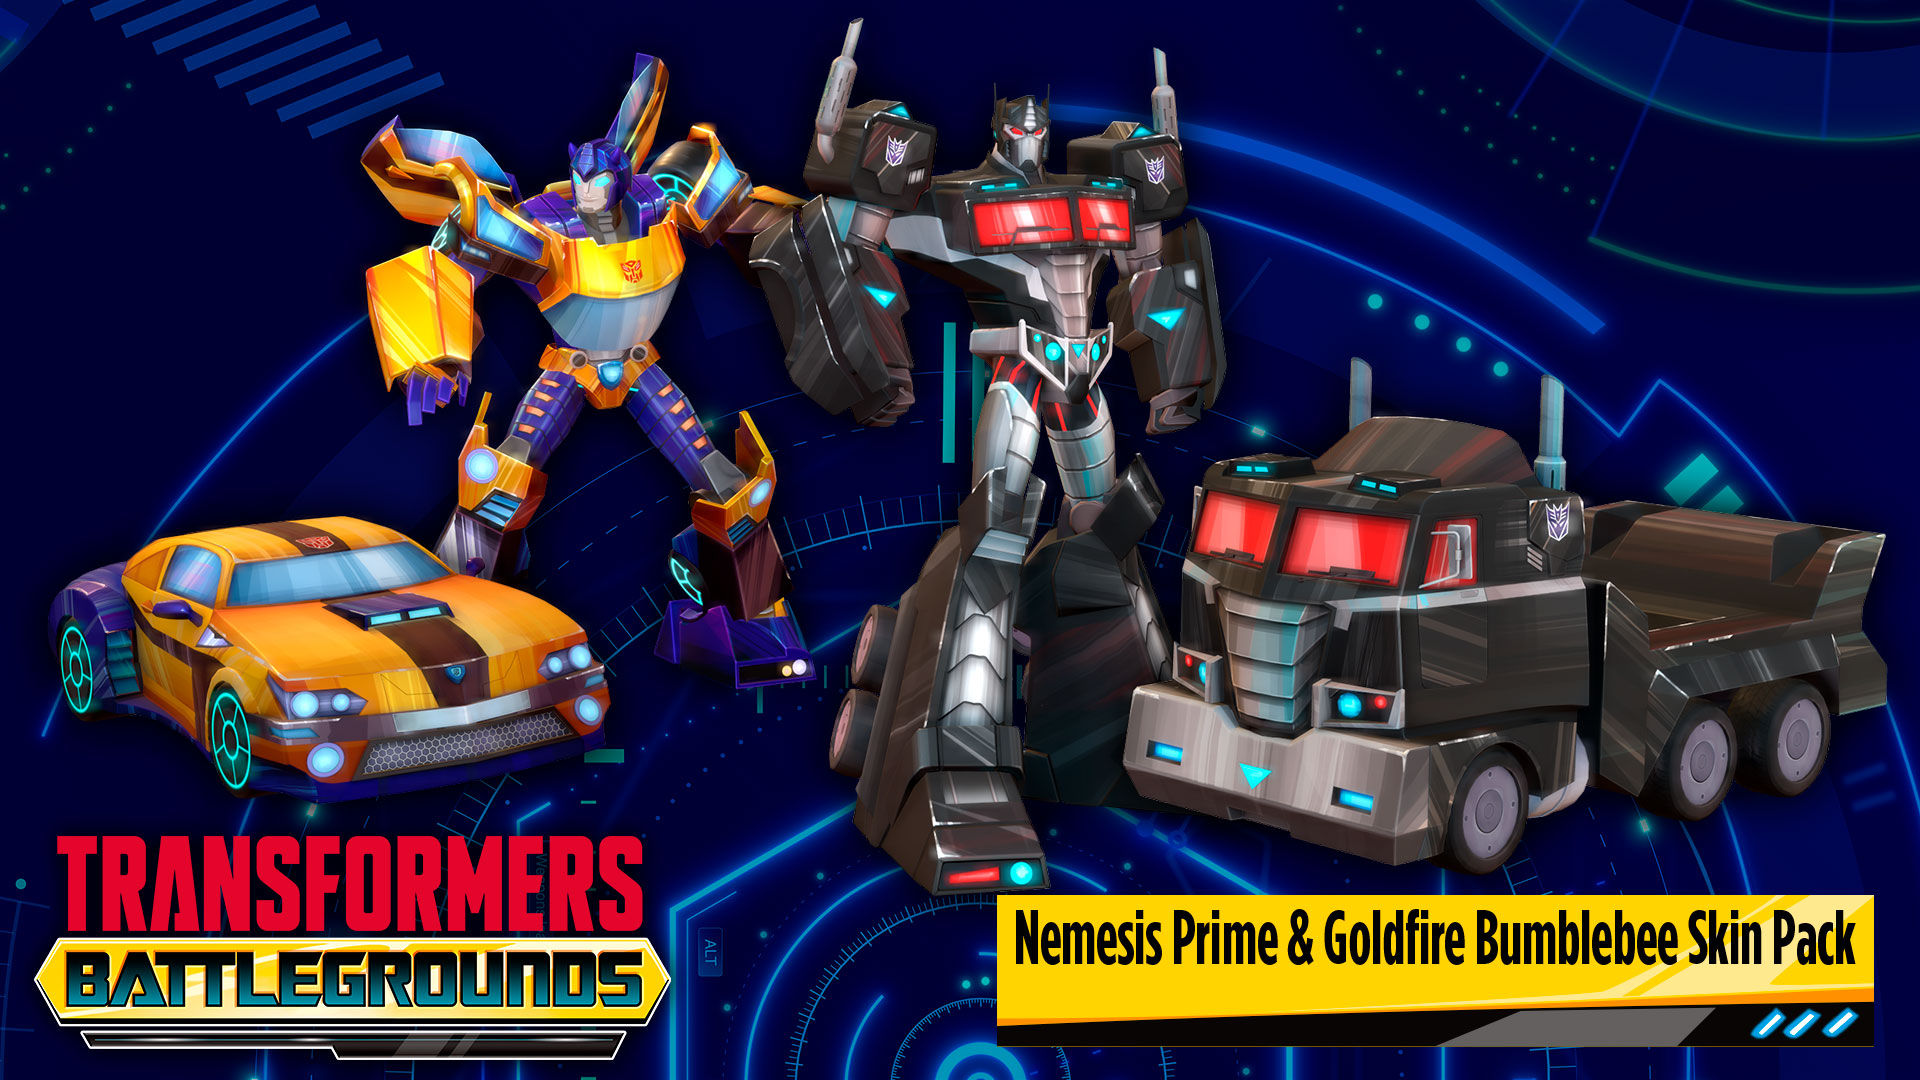 Nemesis Prime & Goldfire Bumblebee Skin Pack